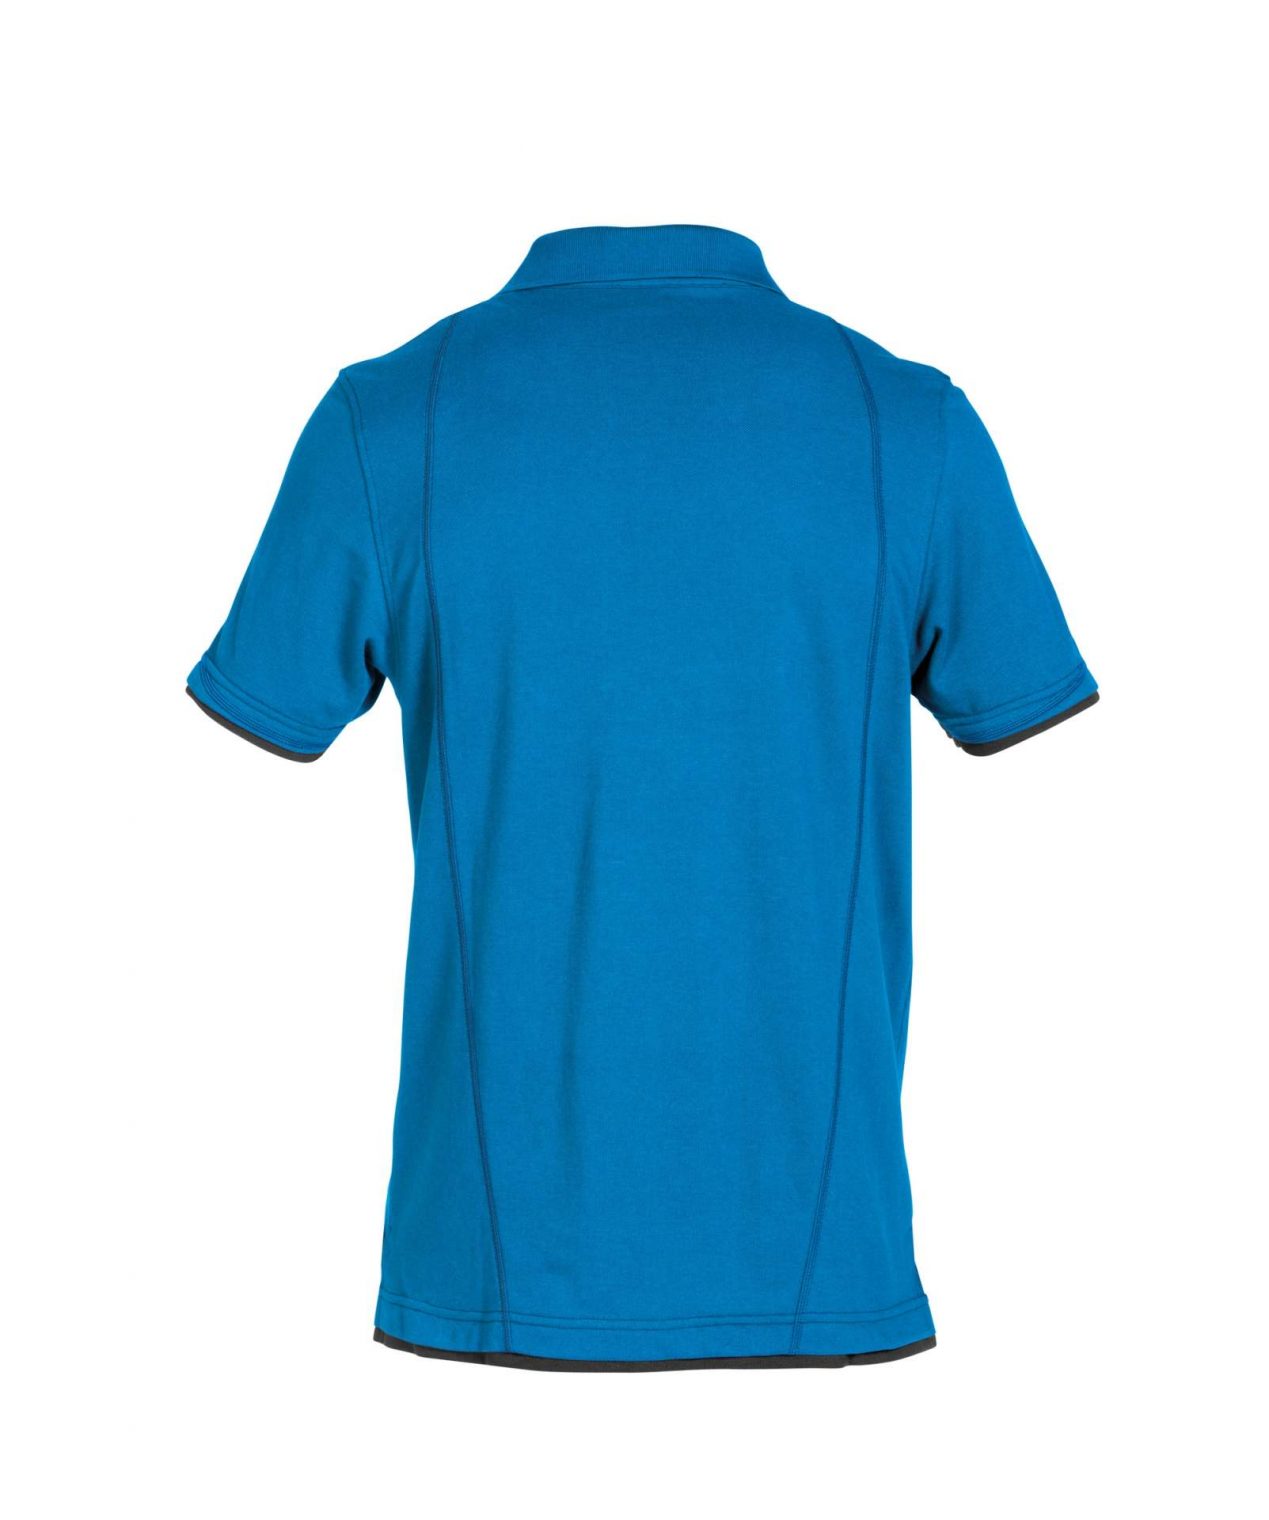 orbital polo shirt azure blue anthracite grey back